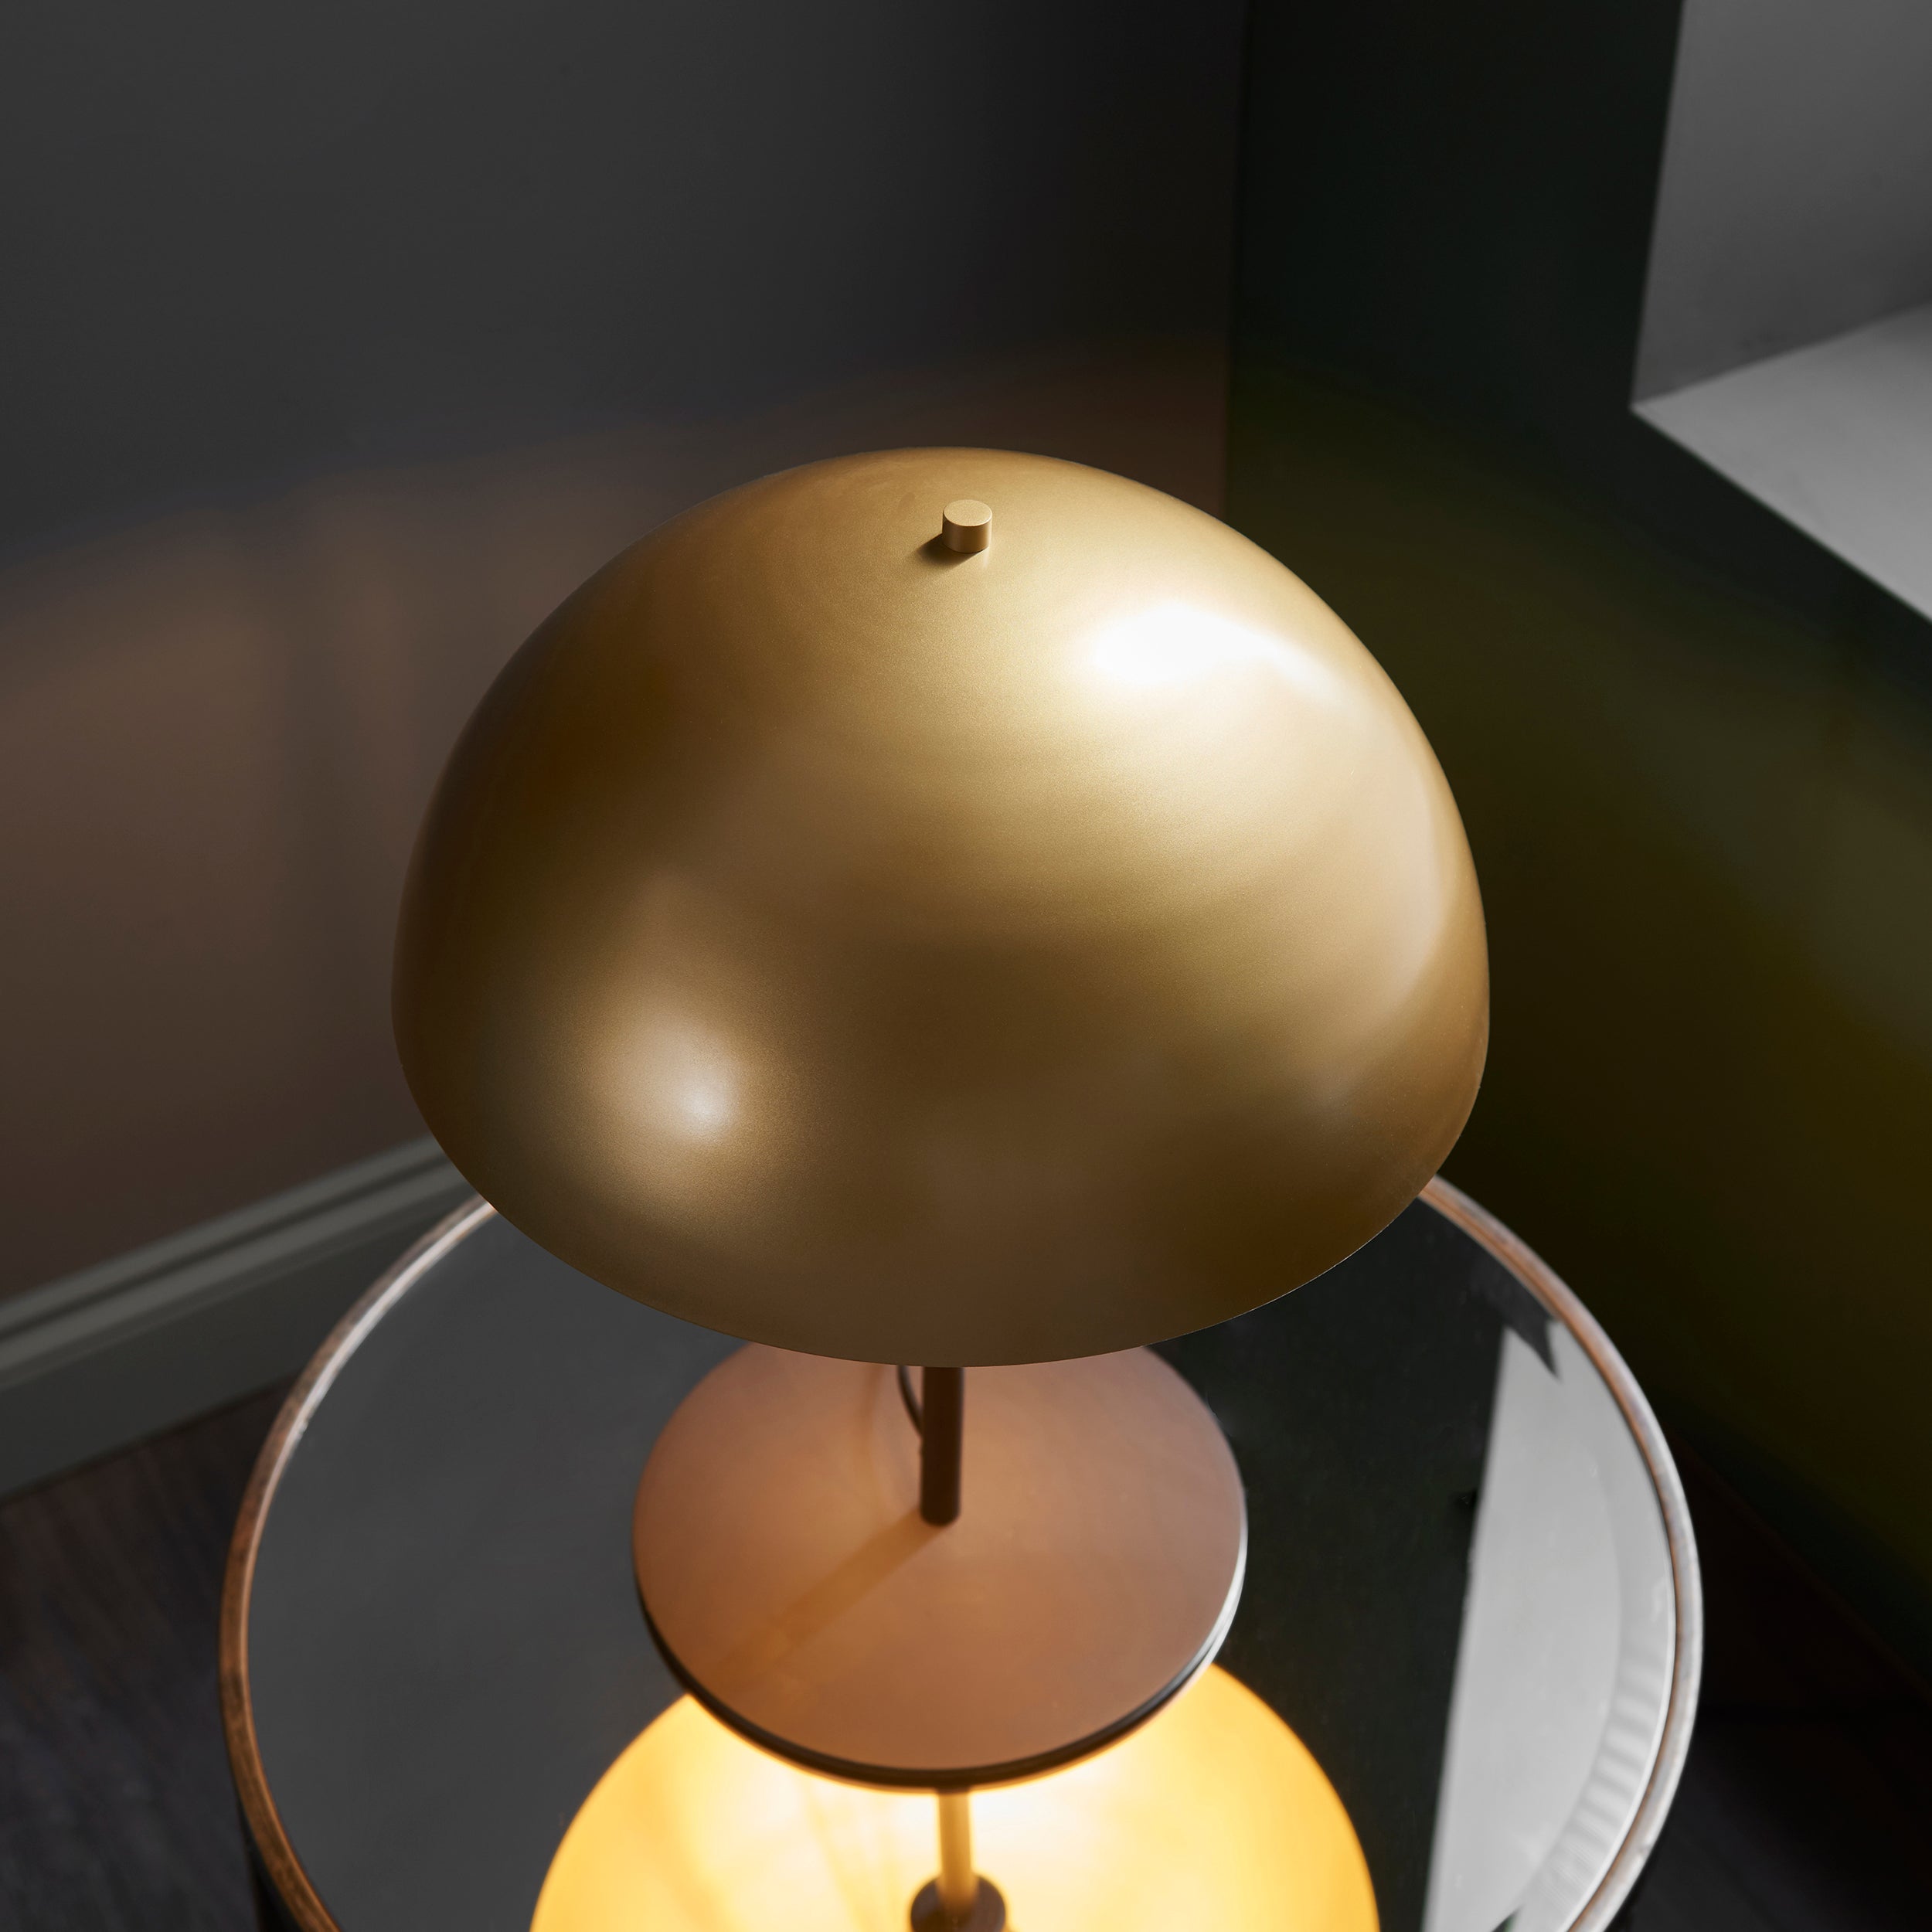 Lightologist Soft gold & dark bronze effect paint Complete Table Light